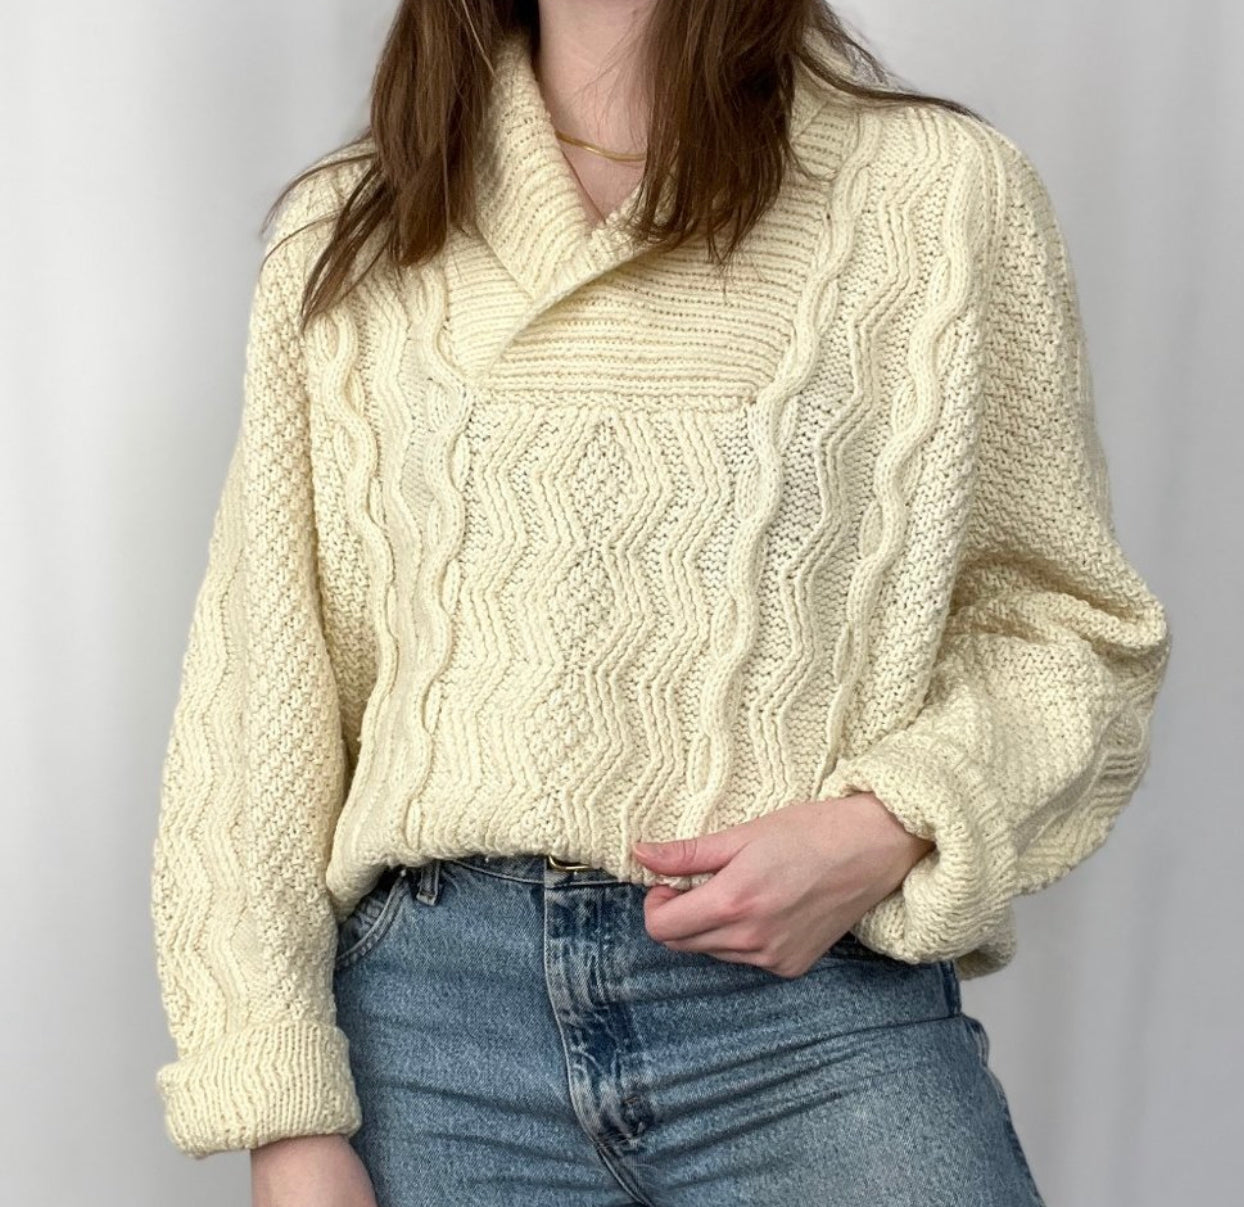 Cream Vintage Aran Cableknit Wool Sweater with Cowl Collar V-Neckline | Handmade | Soft & Warm | S-XL Size | 25% OFF